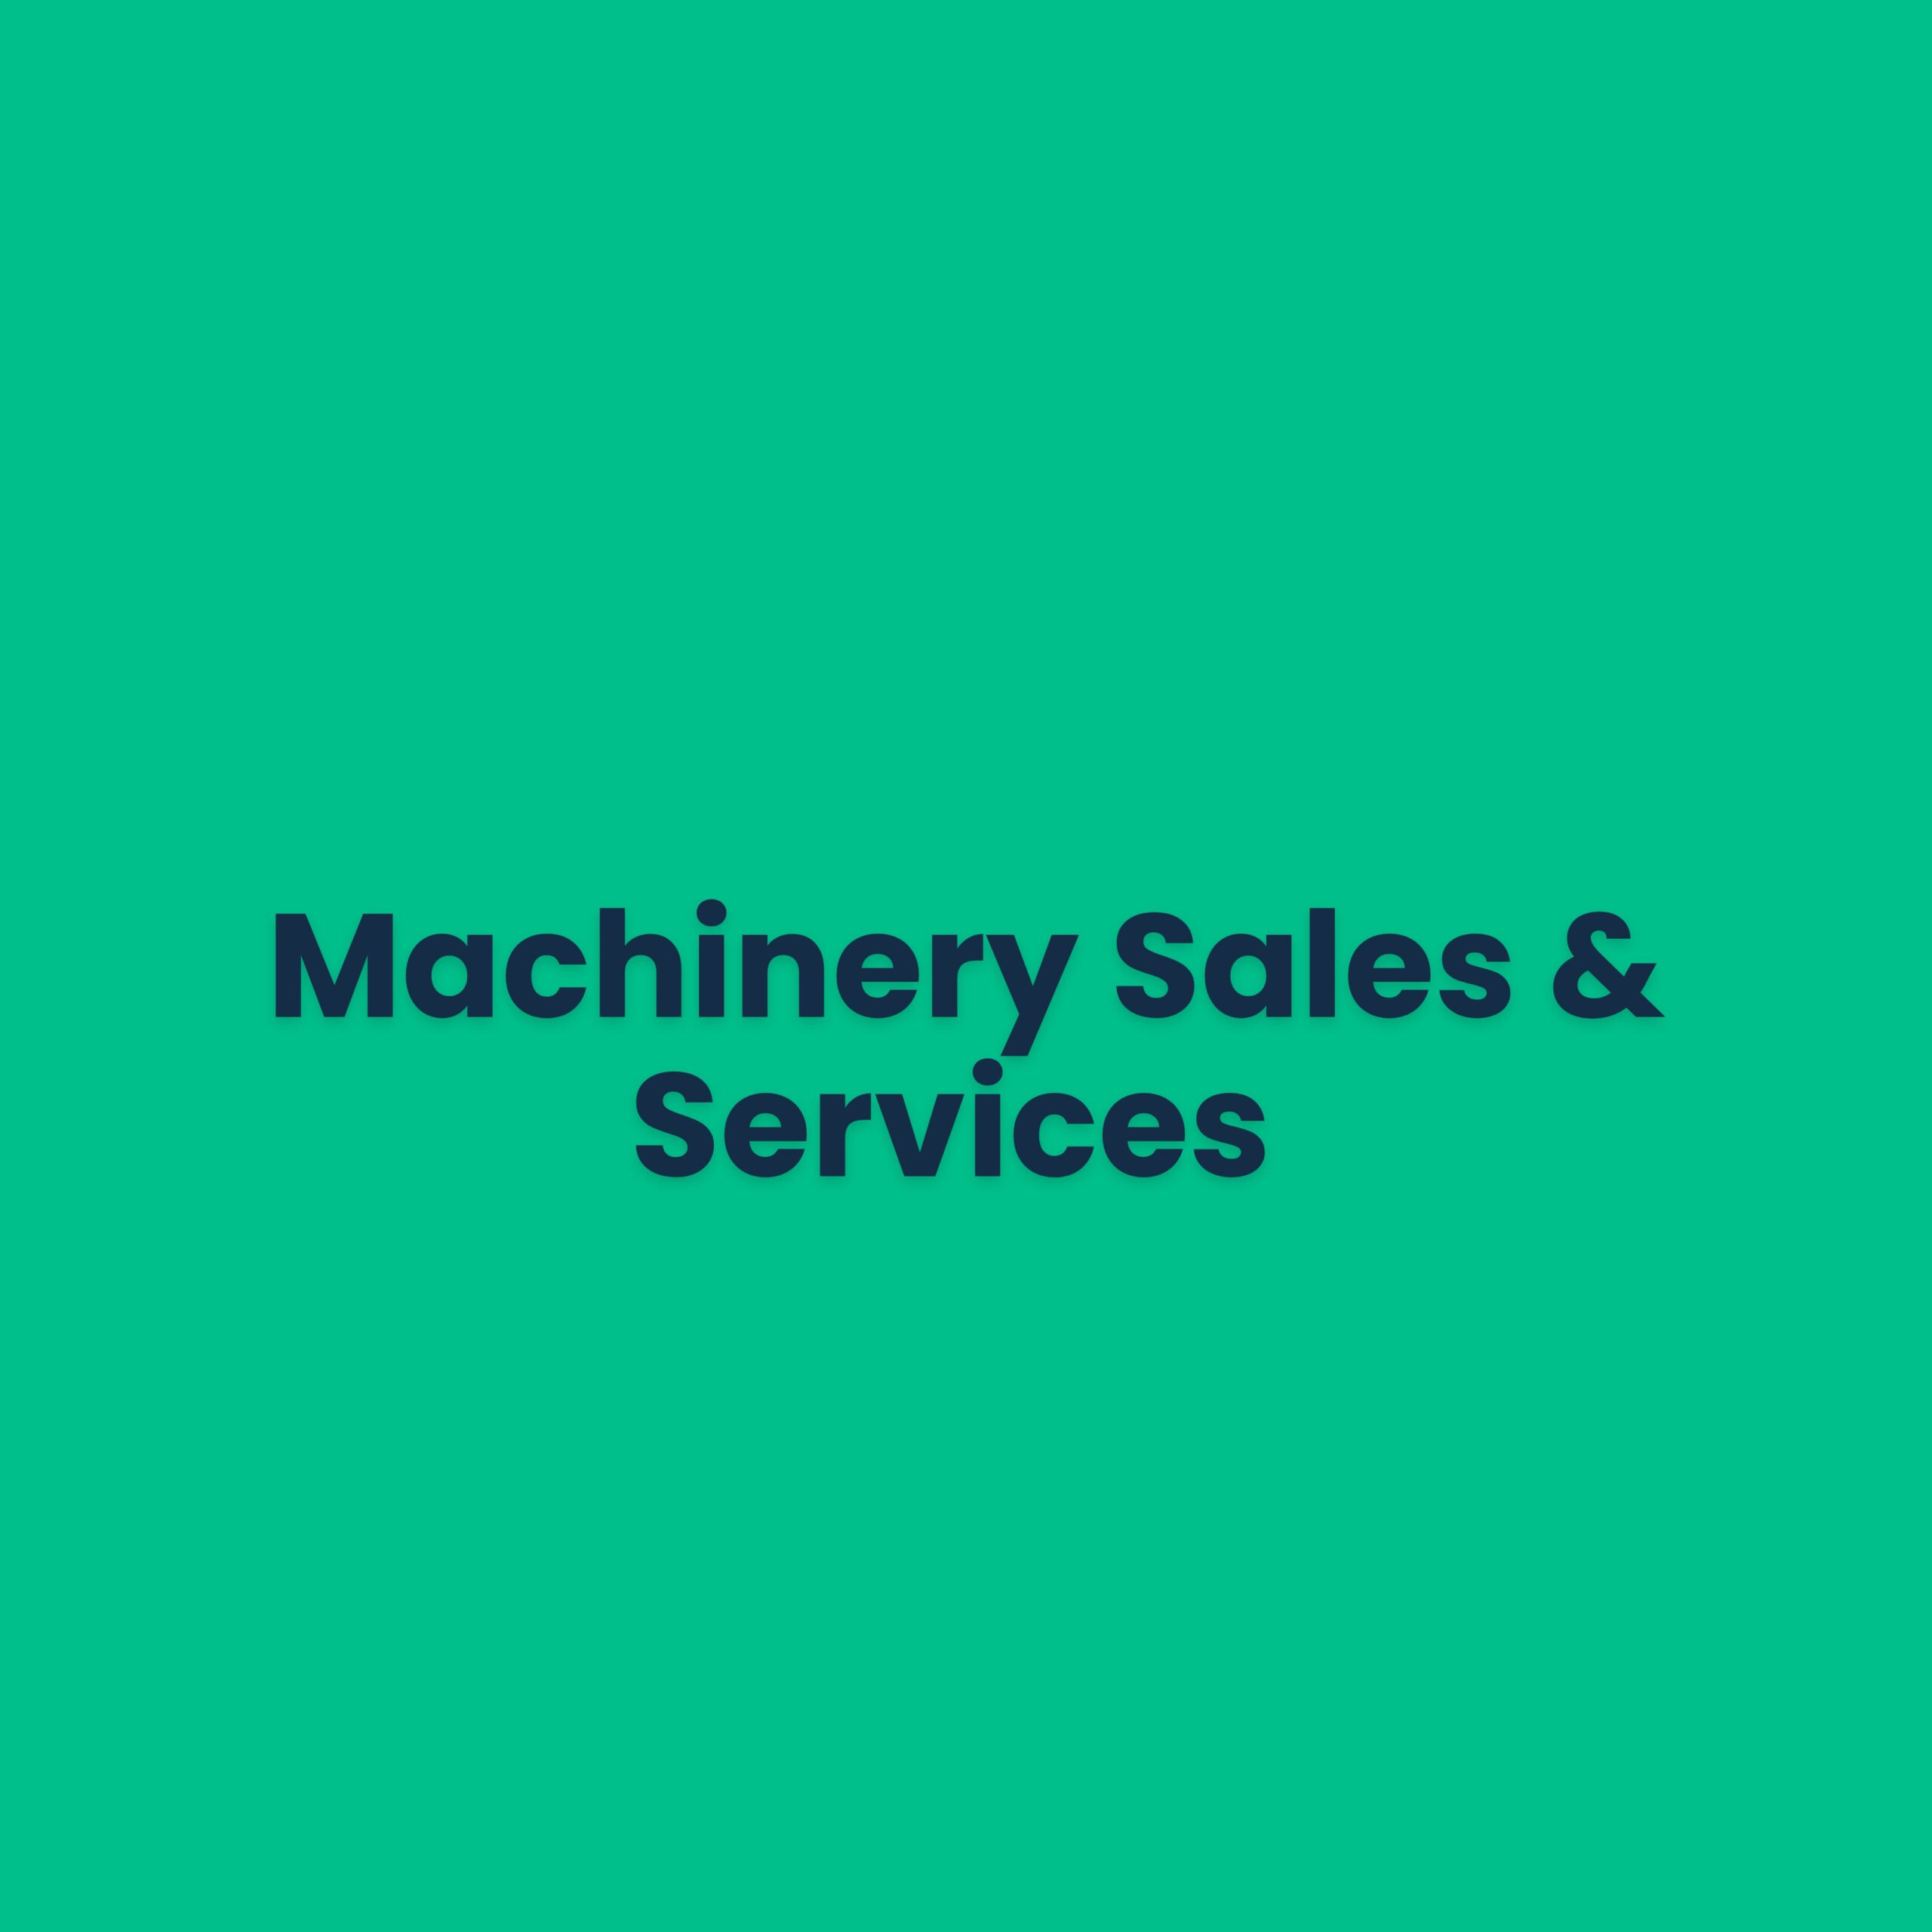 Machinery Sales & Services Malta company logo